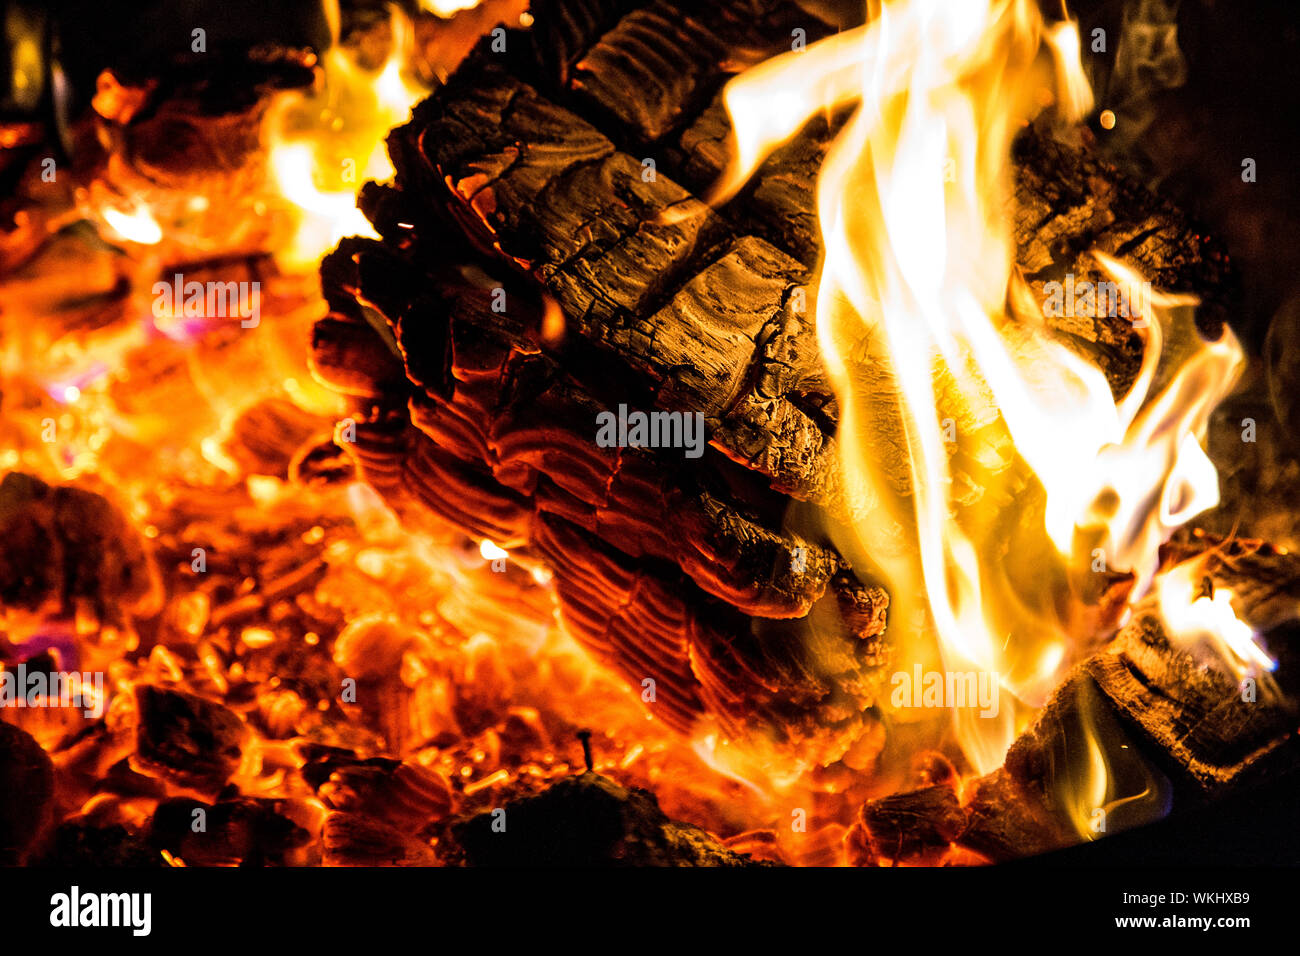 Fire burning coals, glowing embers Stock Photo